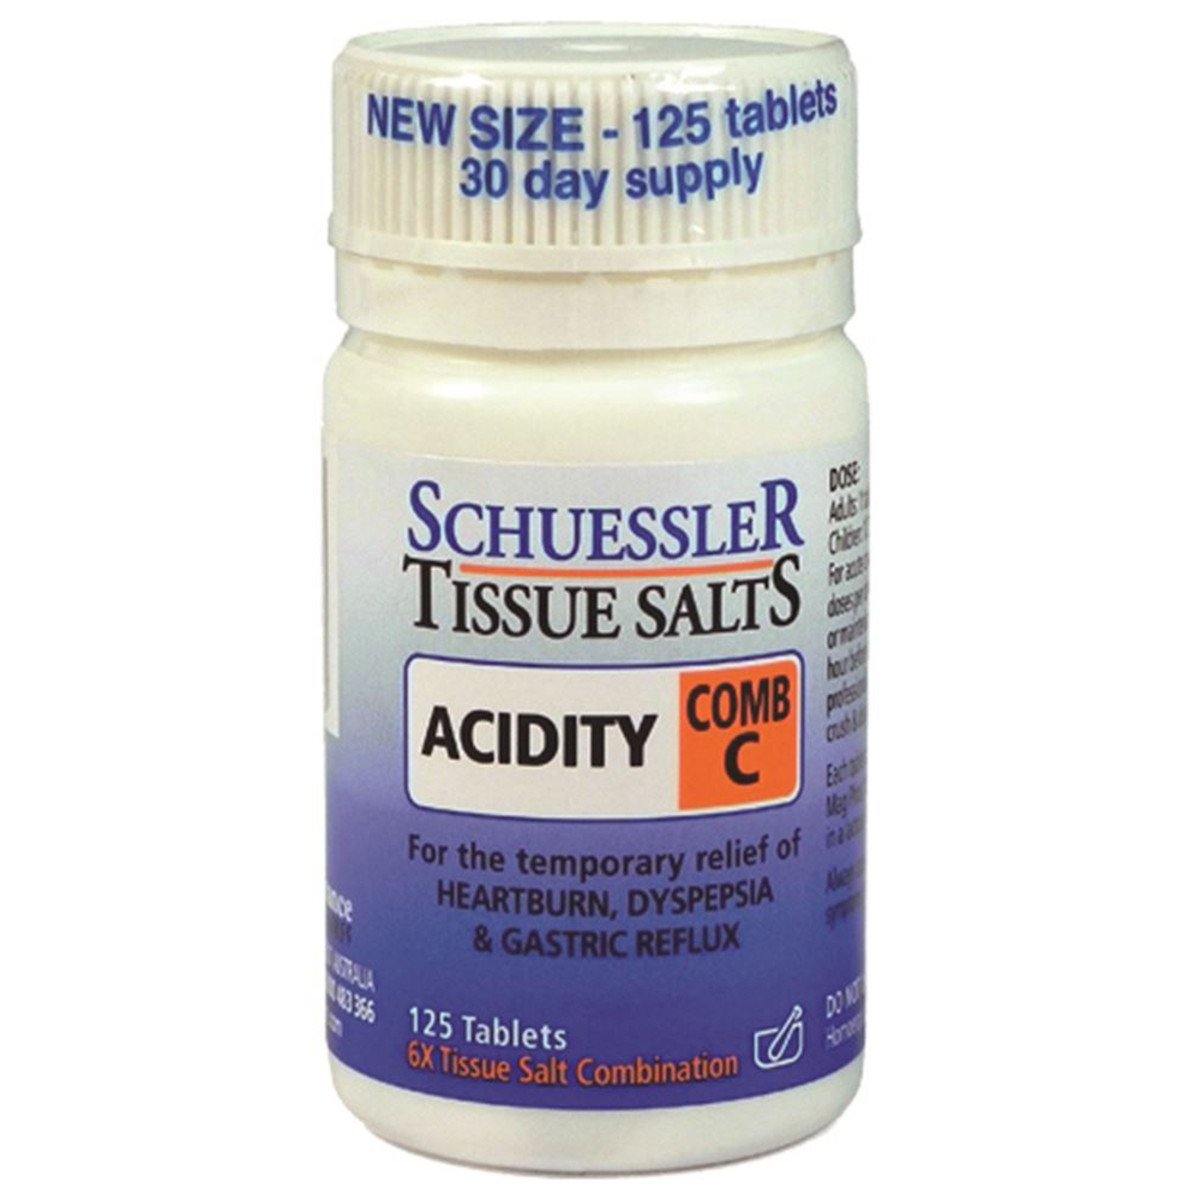 Martin & Pleasance Schuessler Tissue Salts Comb C (Acidity) 125 Tablets - QVM Vitamins™